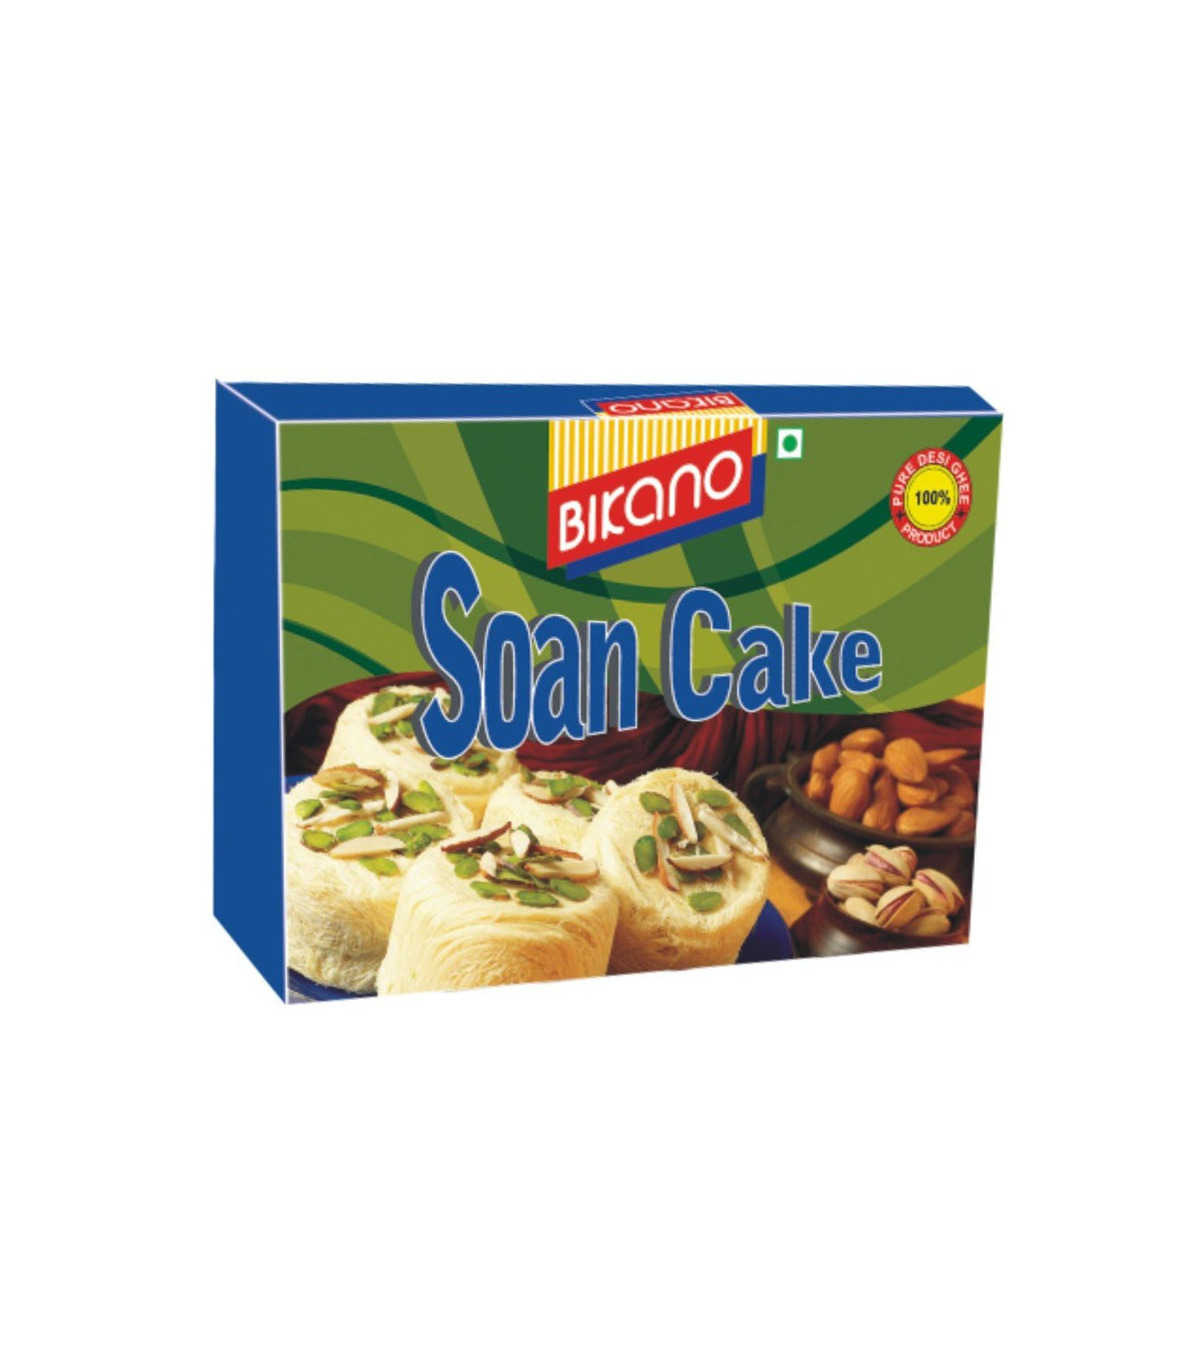 GRB Soan Cake - Regular, 100g : Amazon.in: Grocery & Gourmet Foods